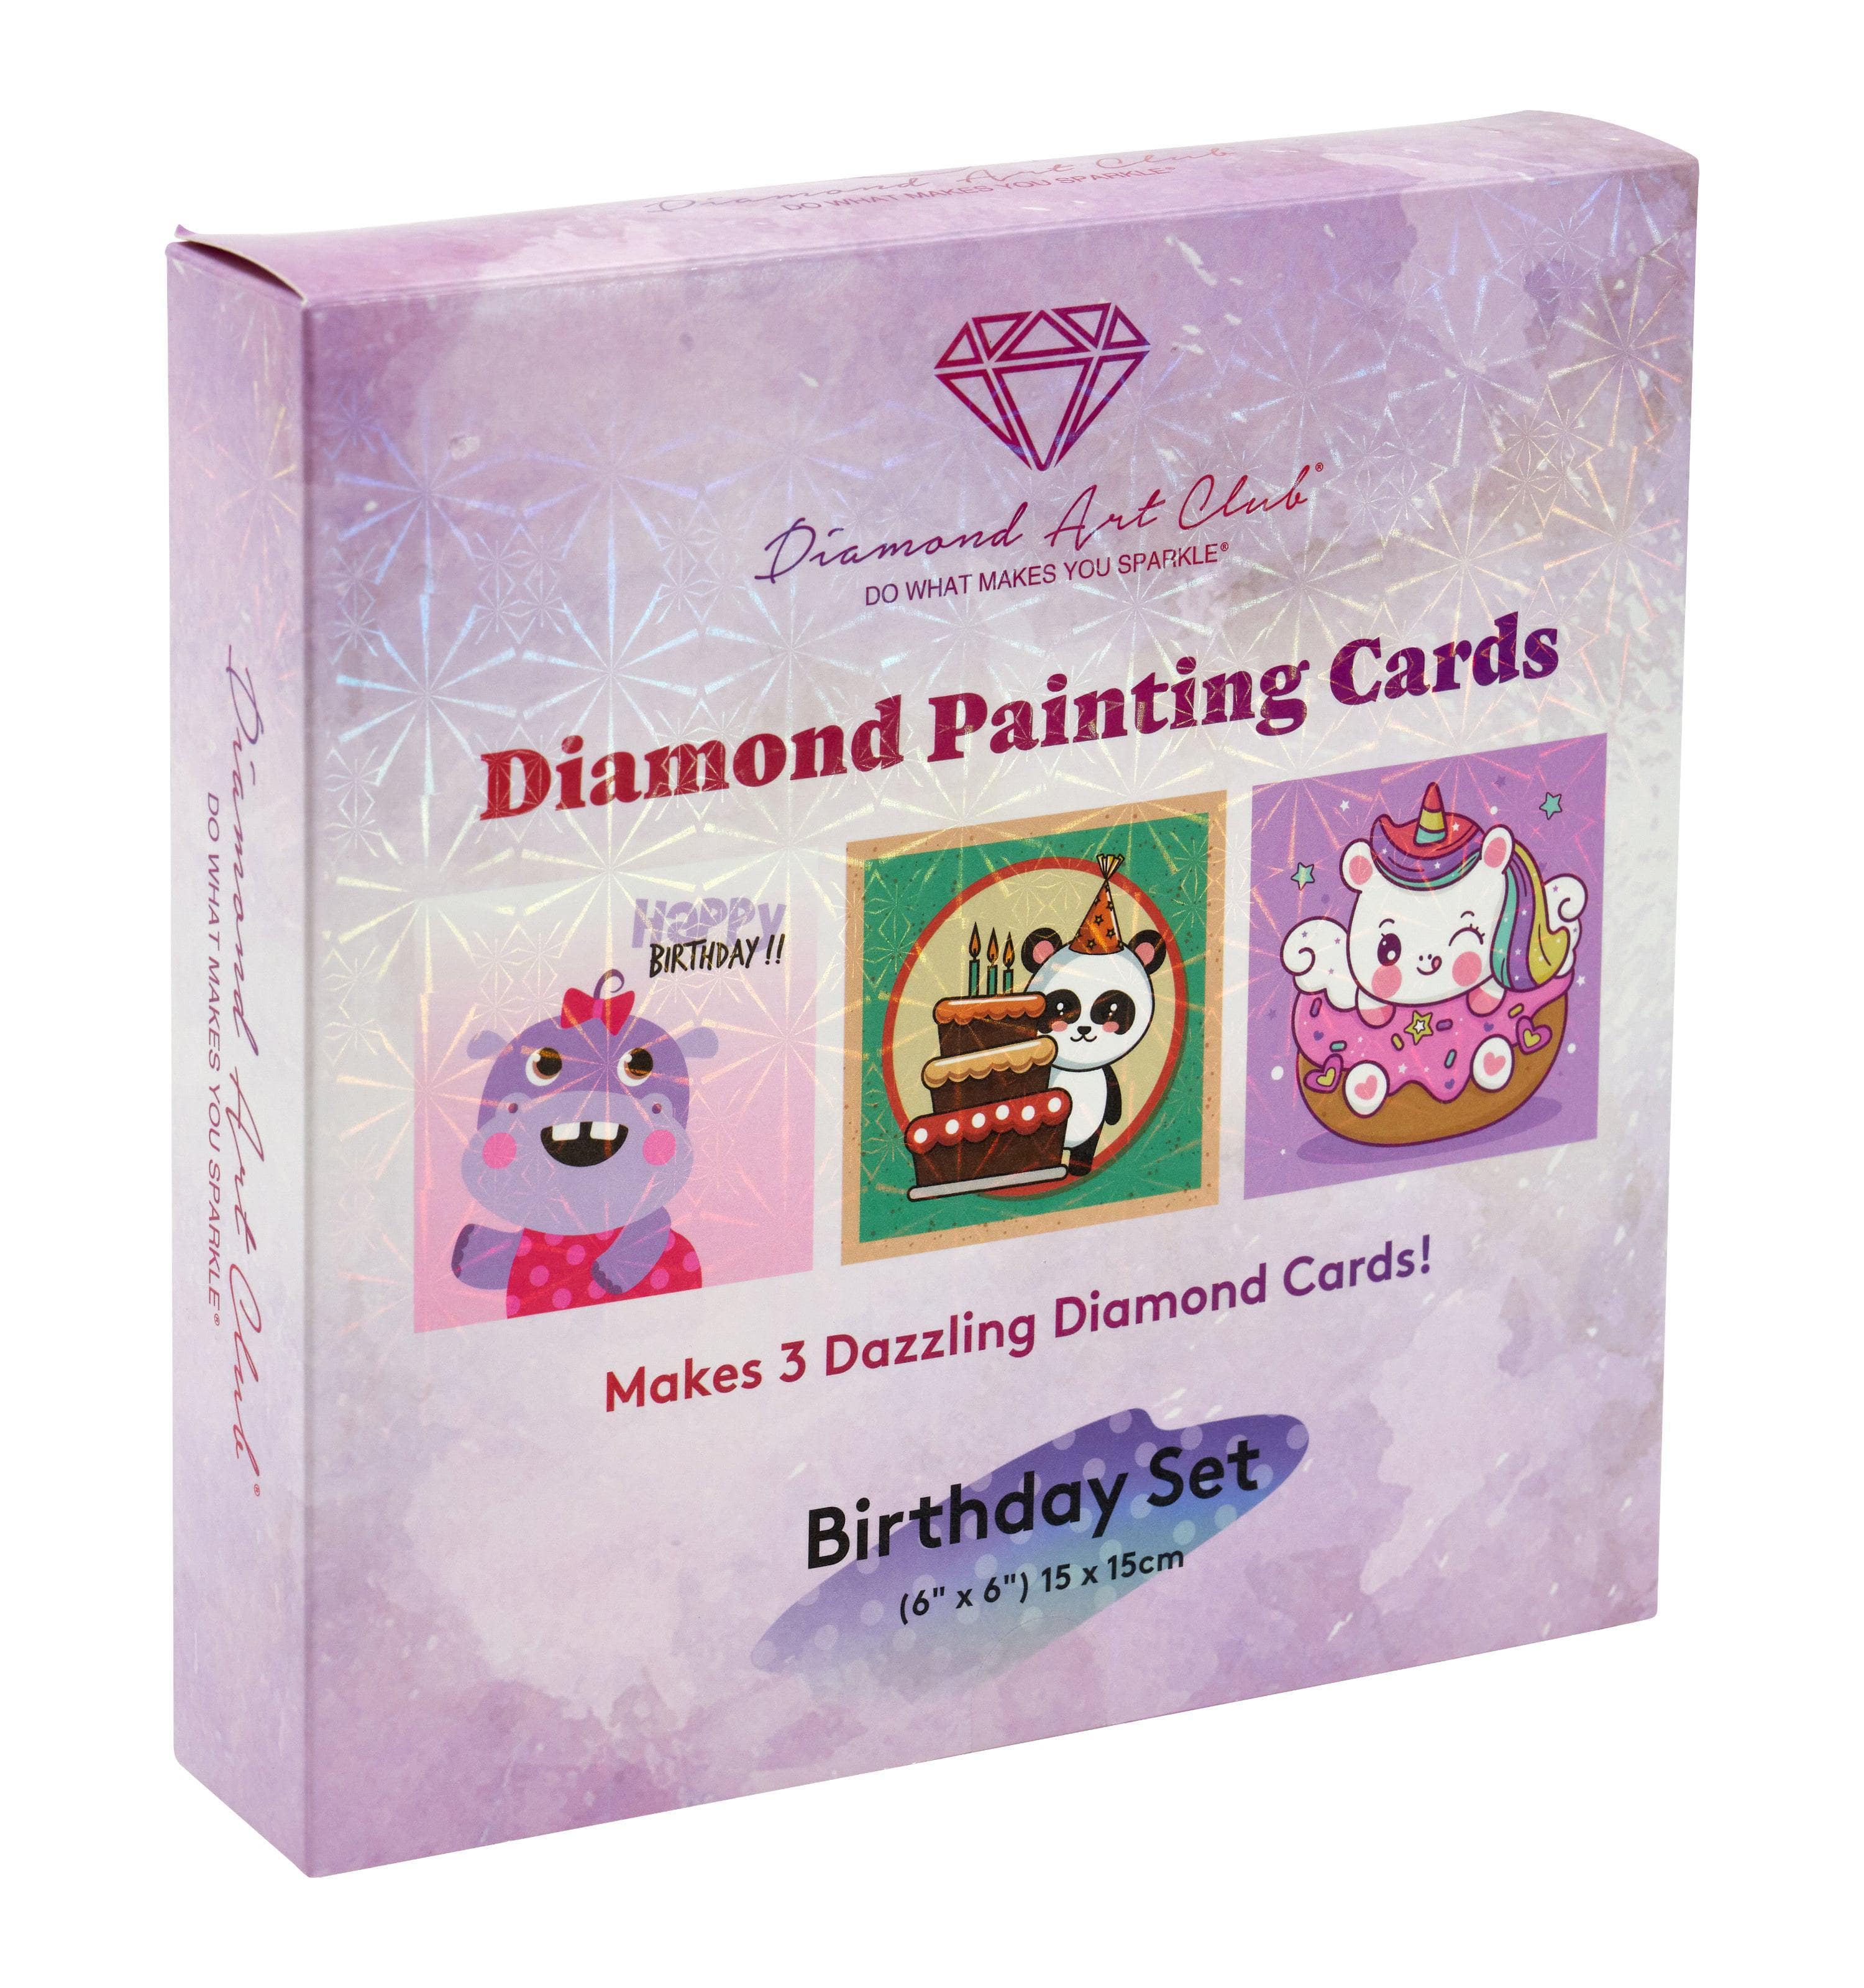 Diamond Dotz® Beginner Greeting Card Variety Pack Diamond Painting Kit